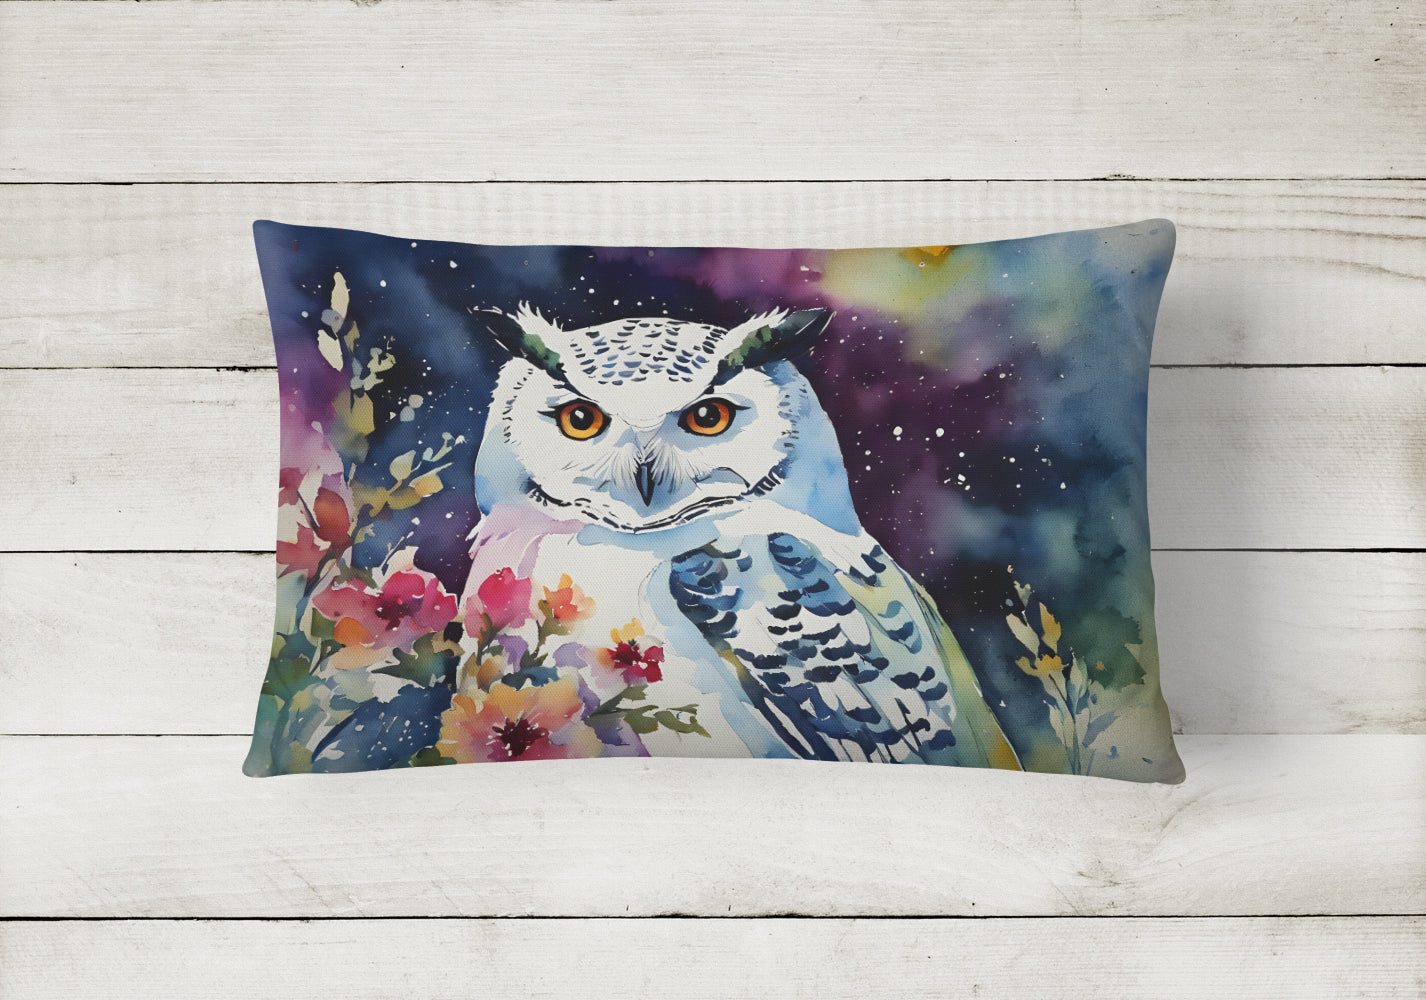 Buy this Snowy Owl Throw Pillow